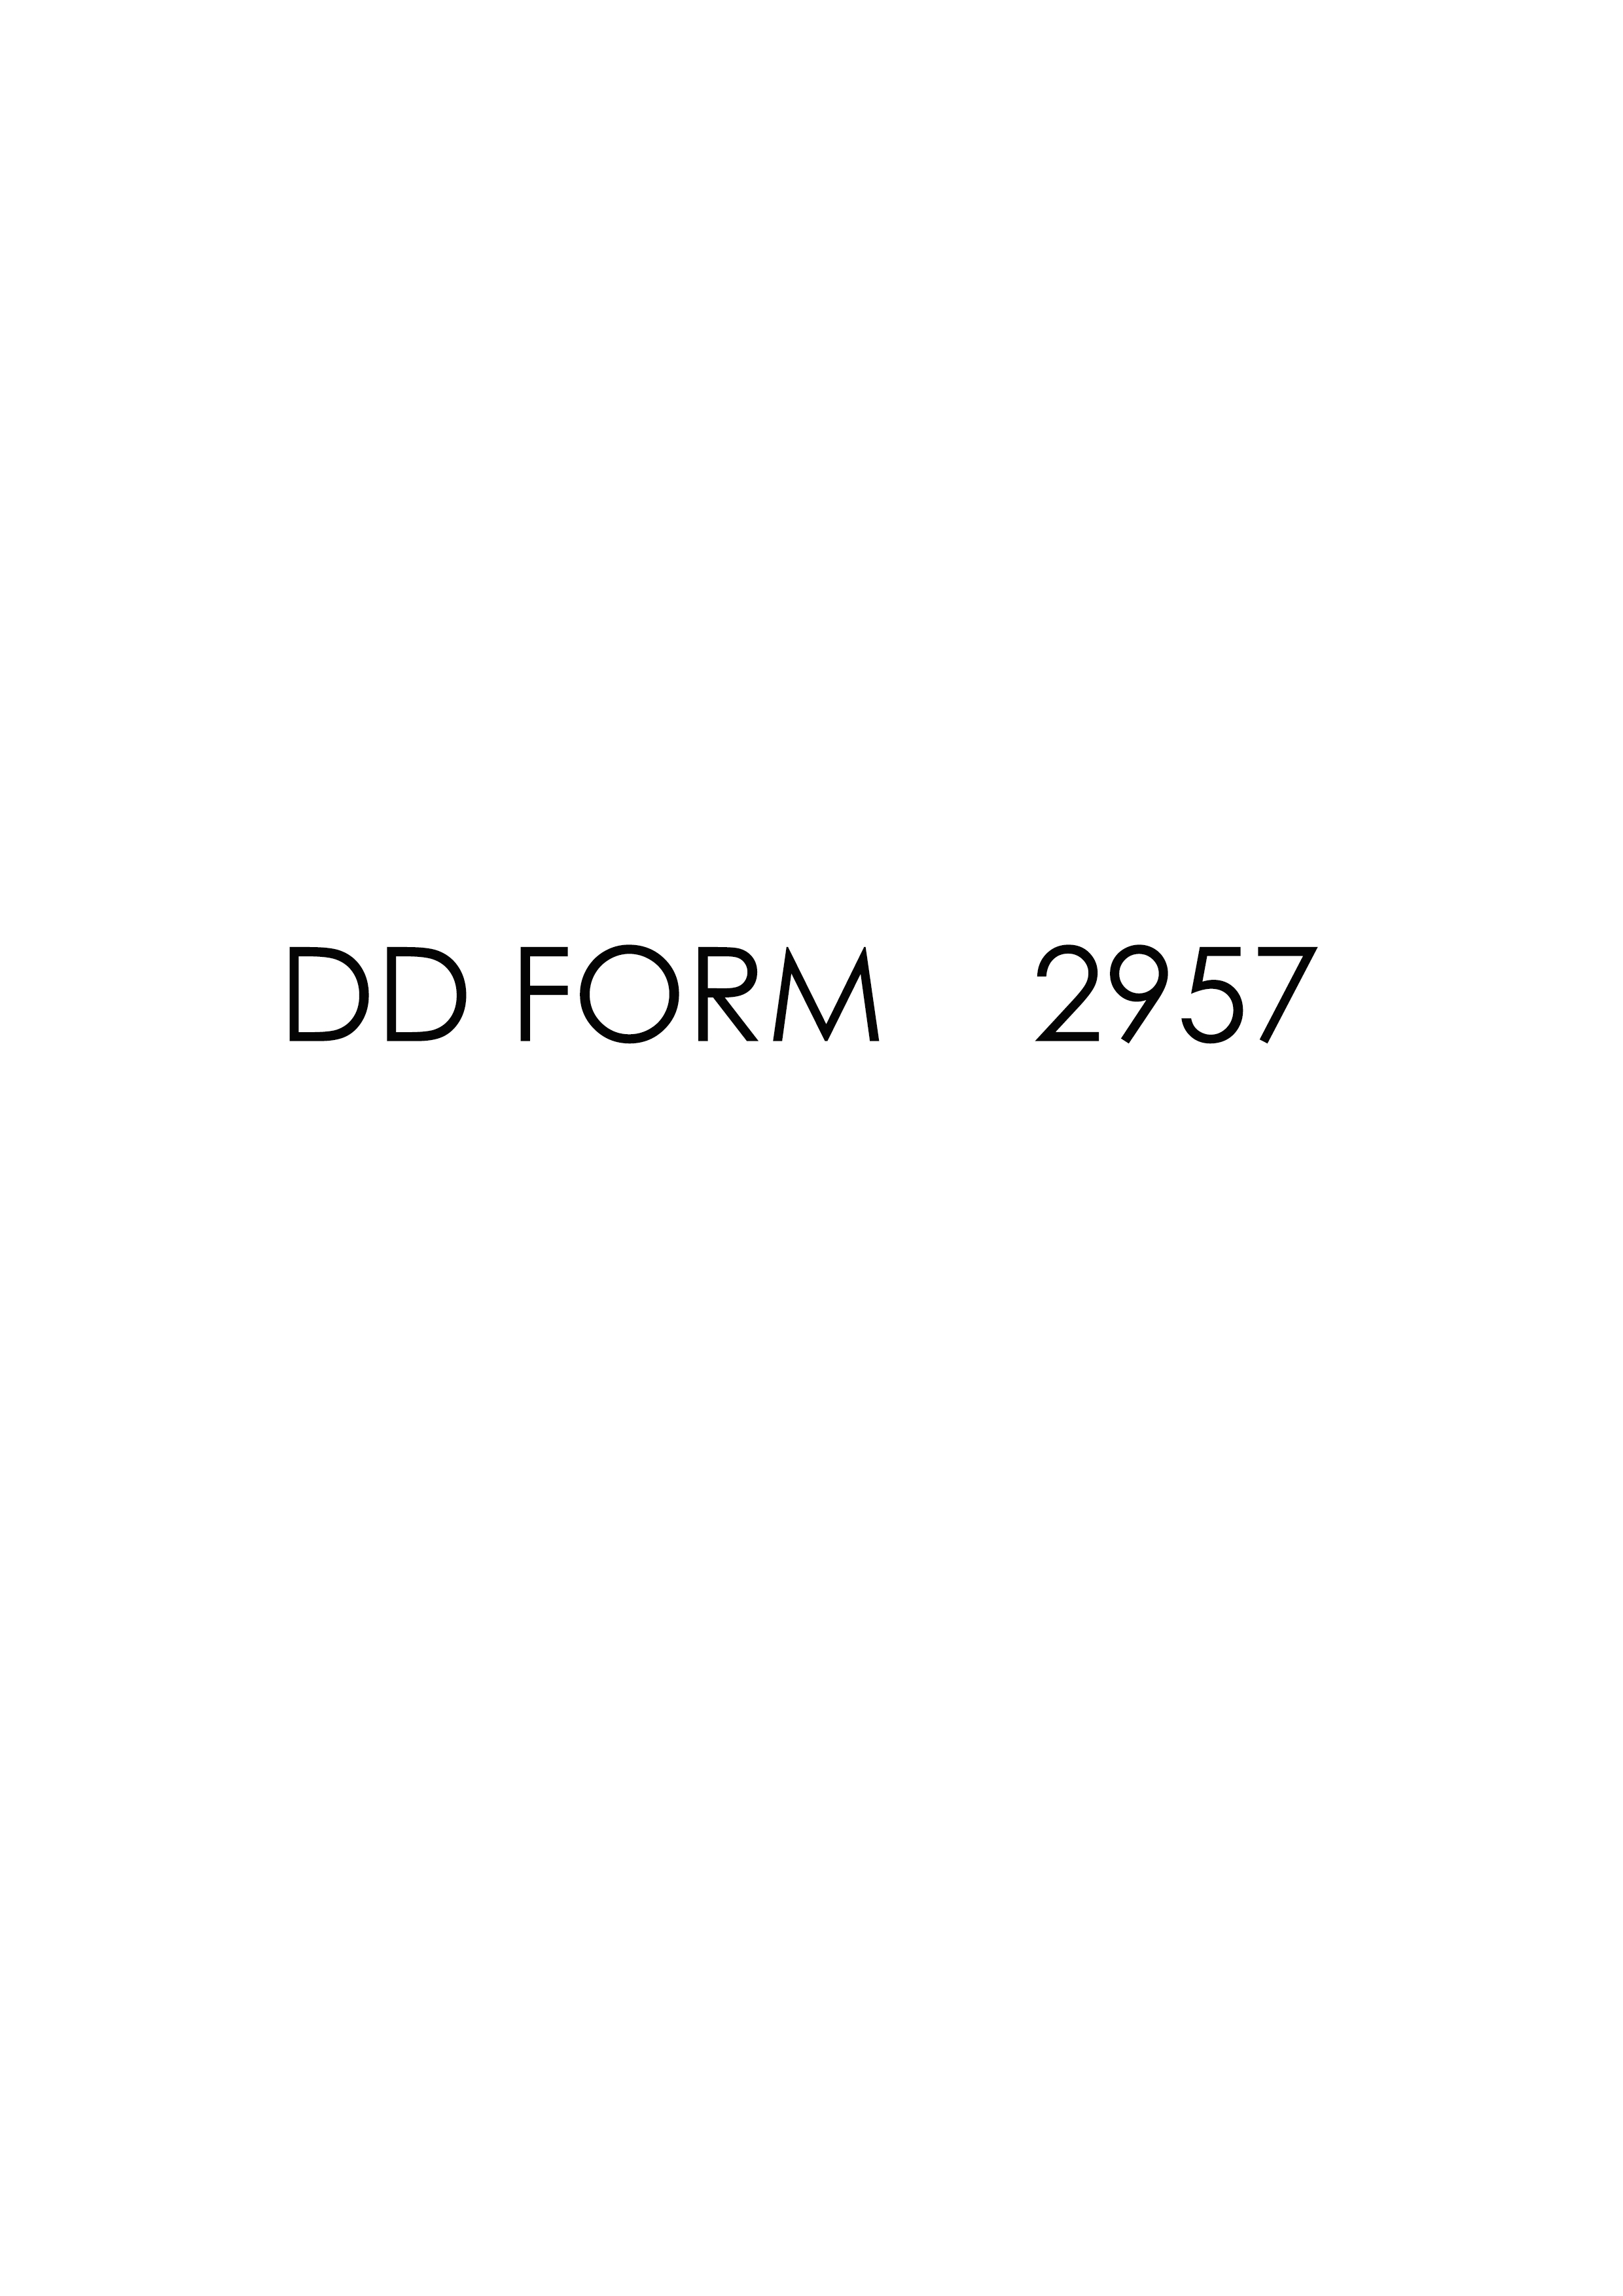 Download dd form 2957